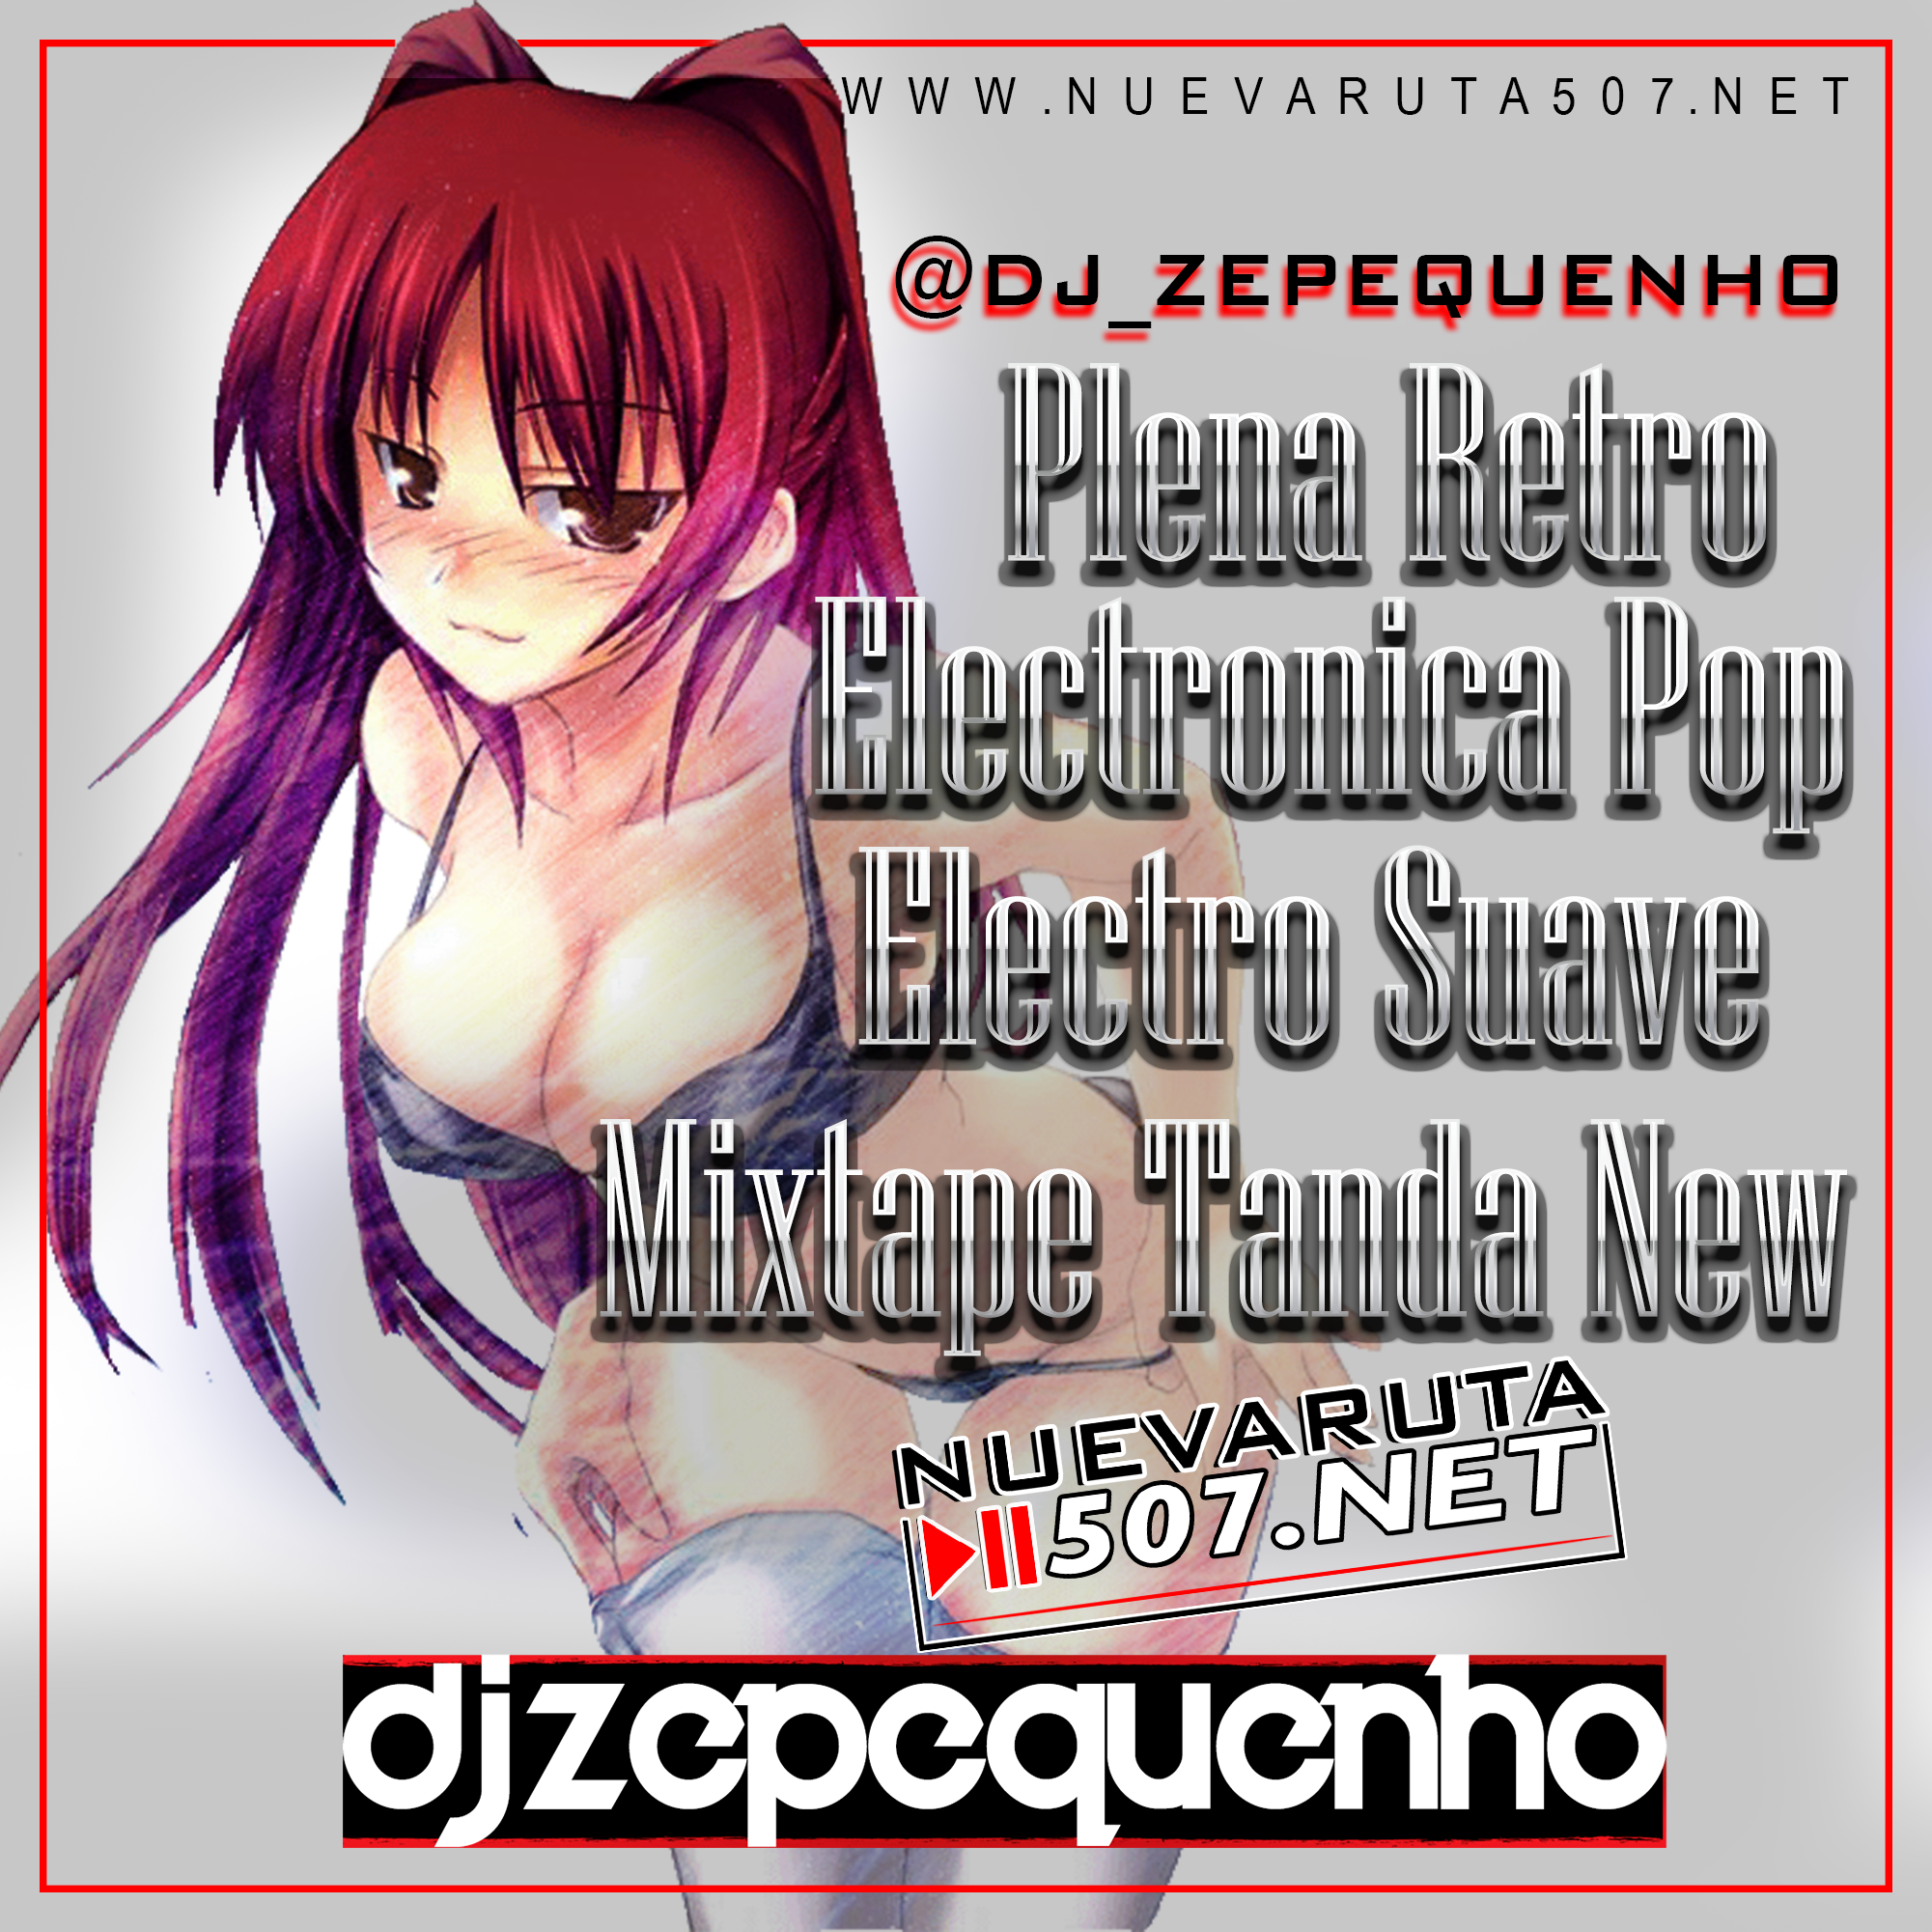 DJ Zepequenho - Electronica Pop Mix.mp3